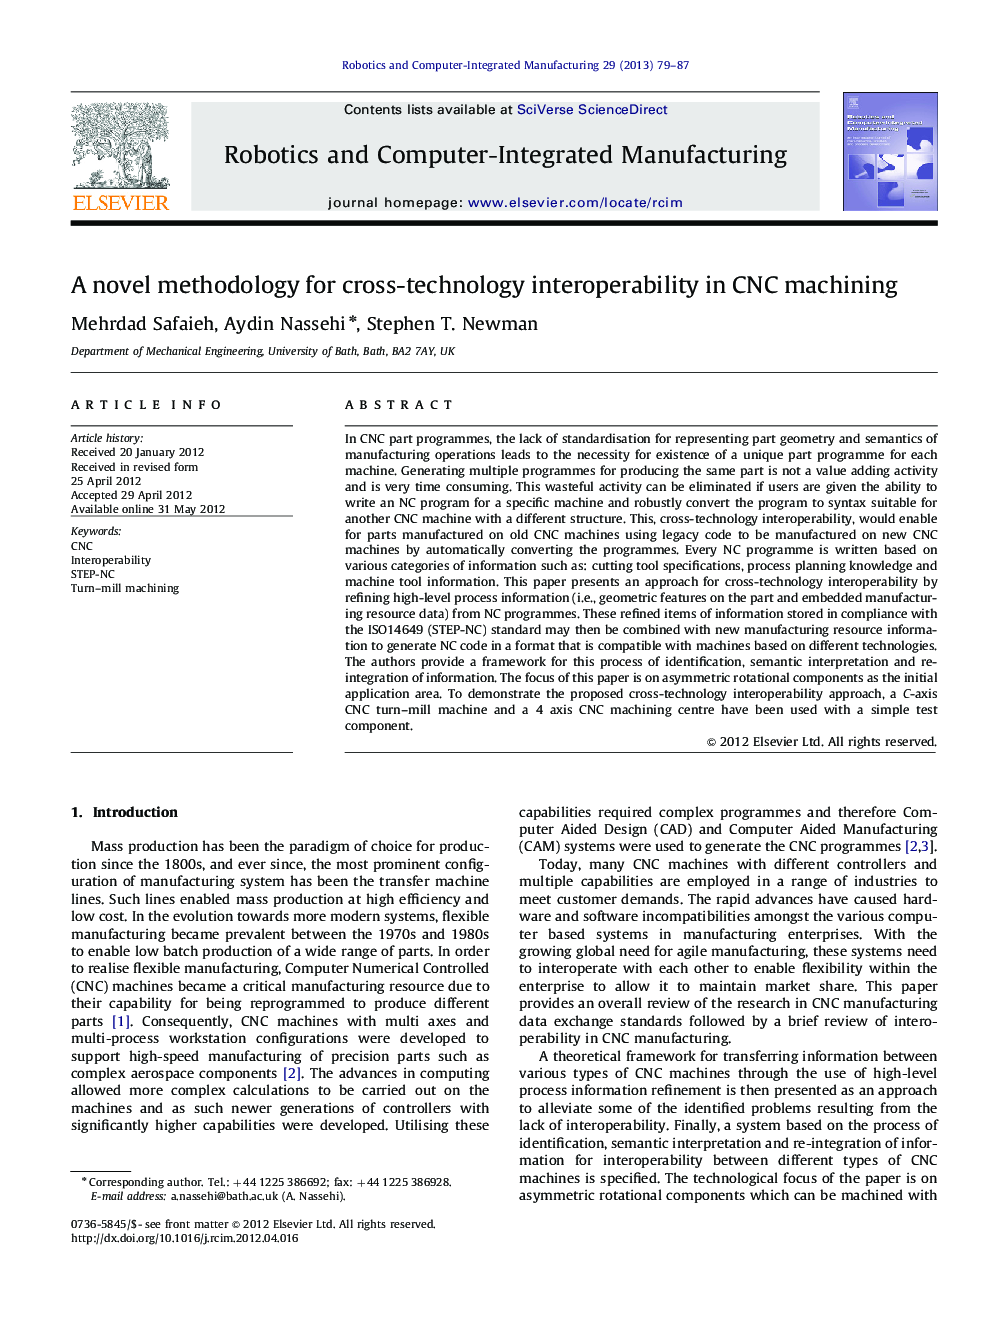 A novel methodology for cross-technology interoperability in CNC machining